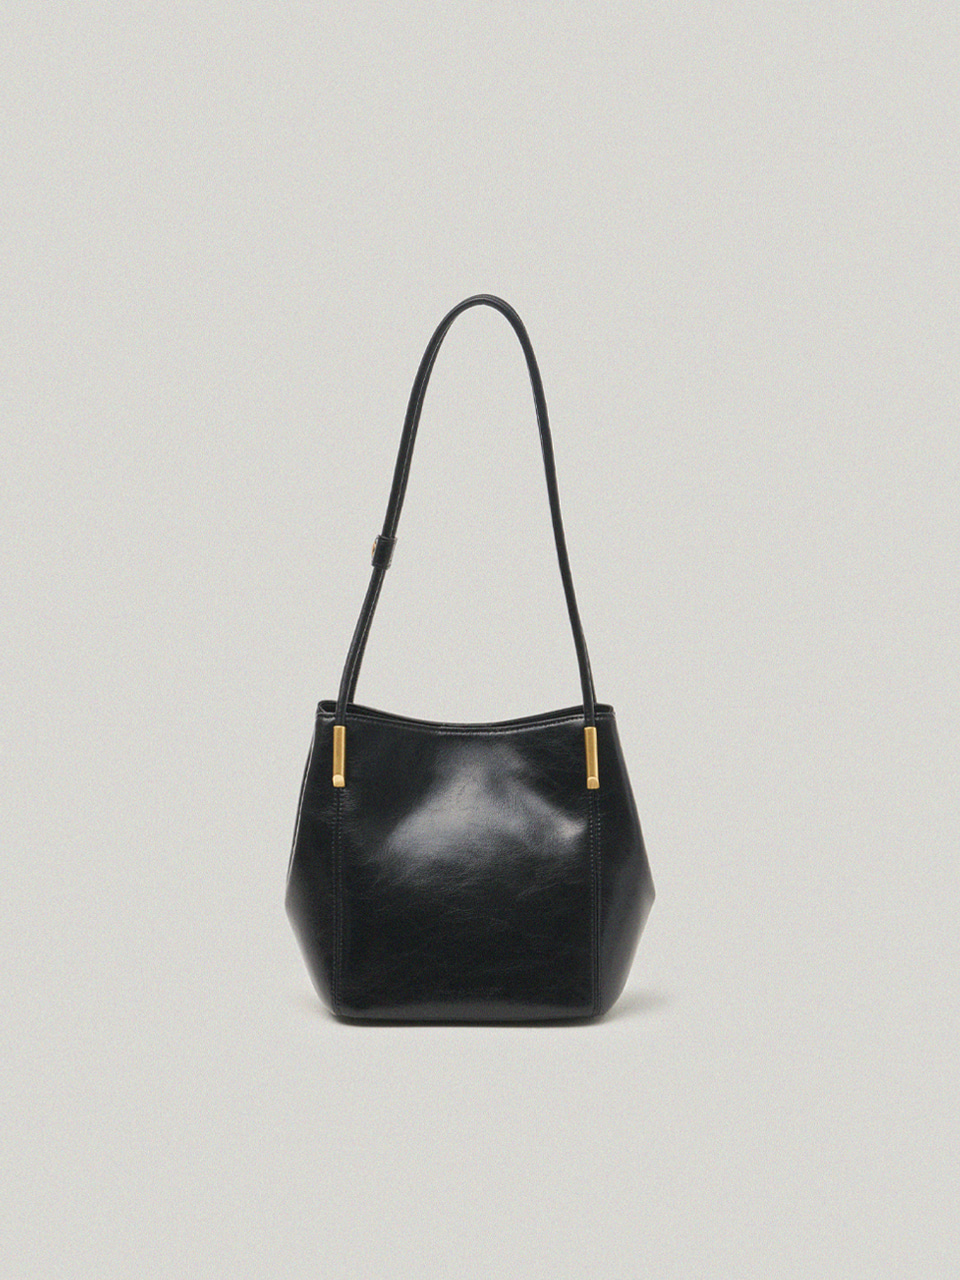 Marron Bag / Soft Black